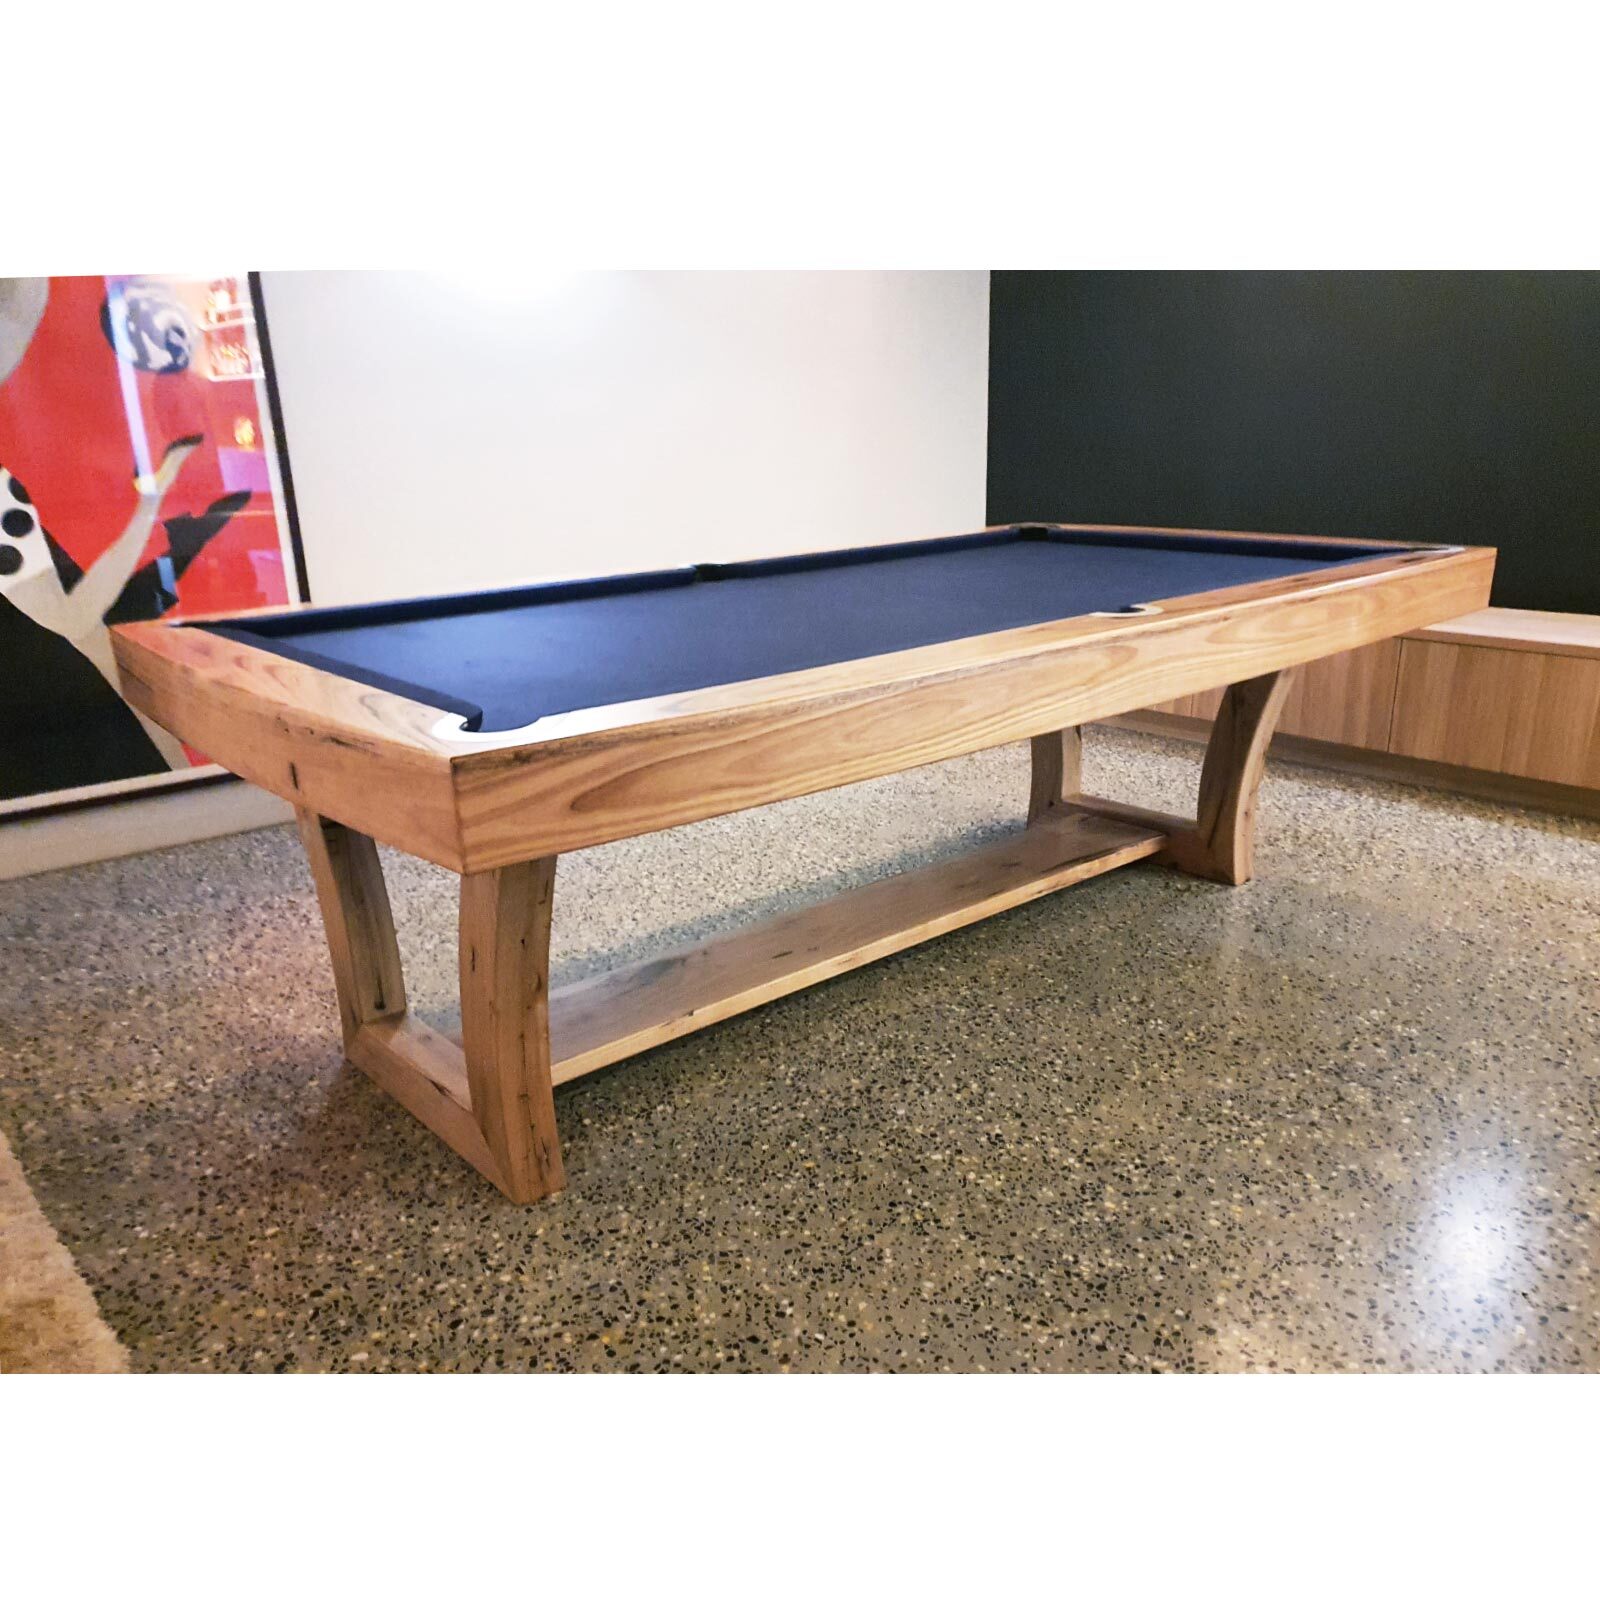 8 Foot Slate Homestead Pool Table, made in Australia